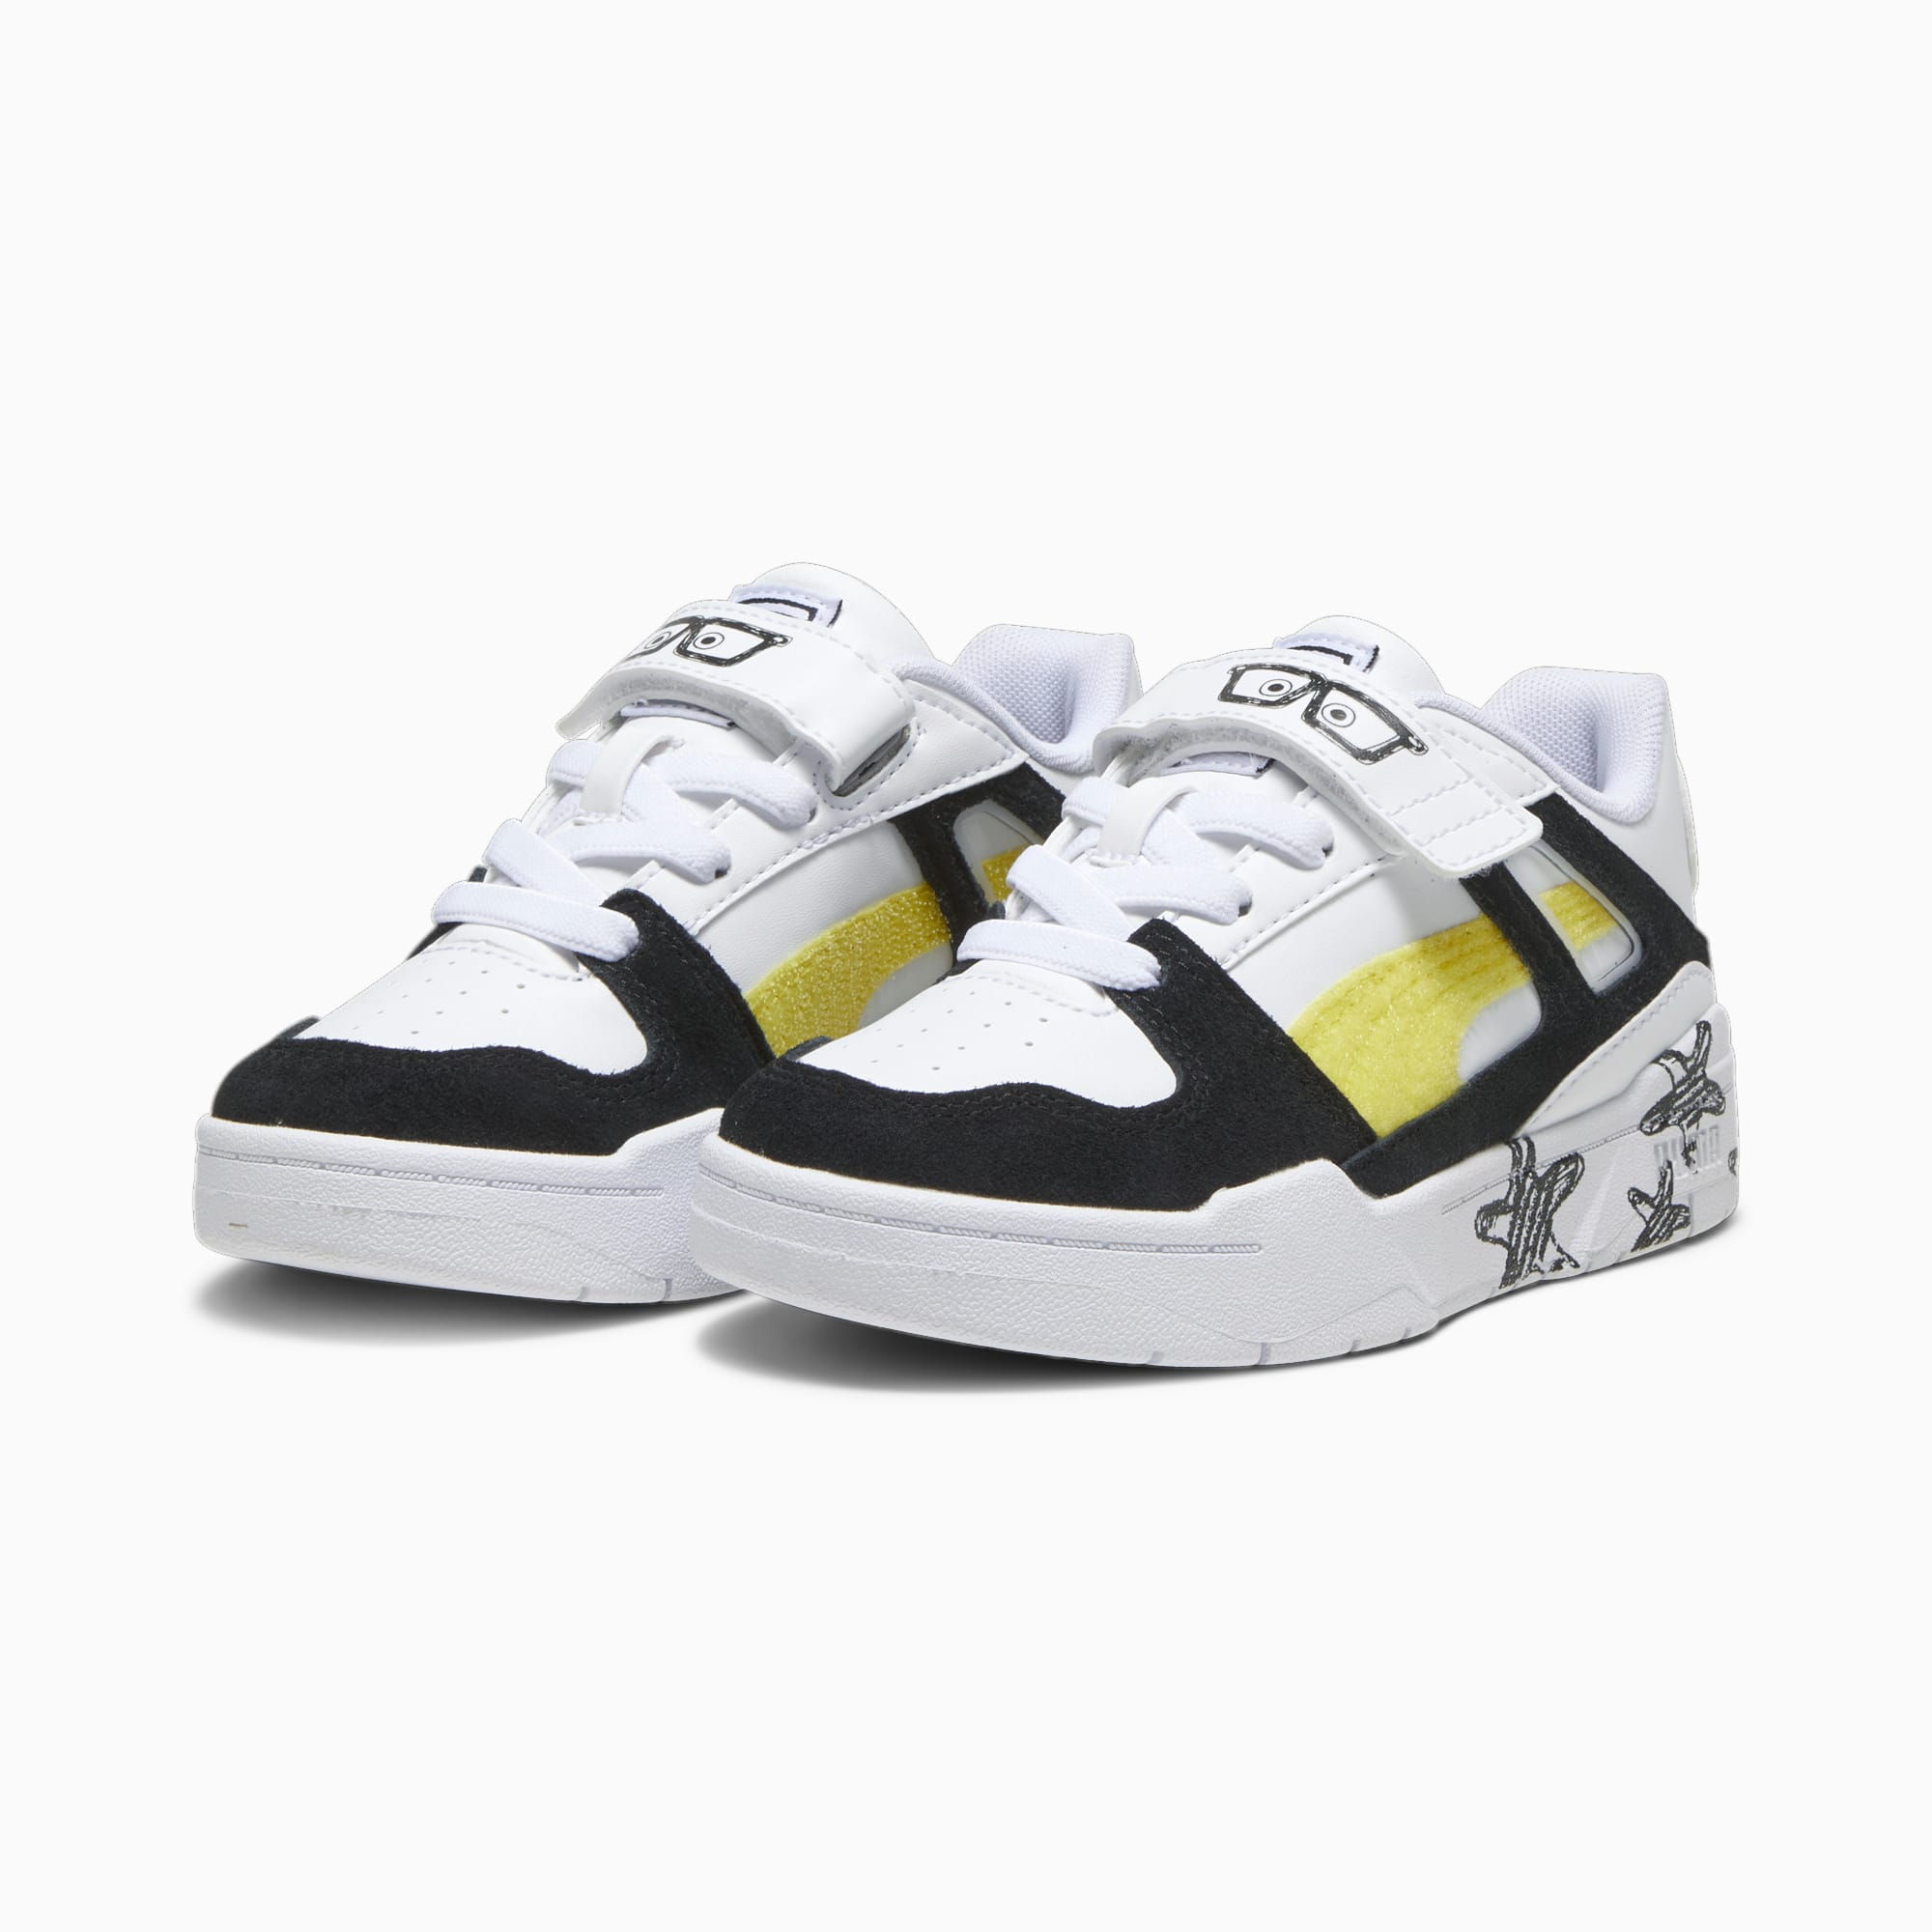 PUMA X Spongebob Squarepants Slipstream Kids' Sneakers, White/Black, Size 27,5, Shoes